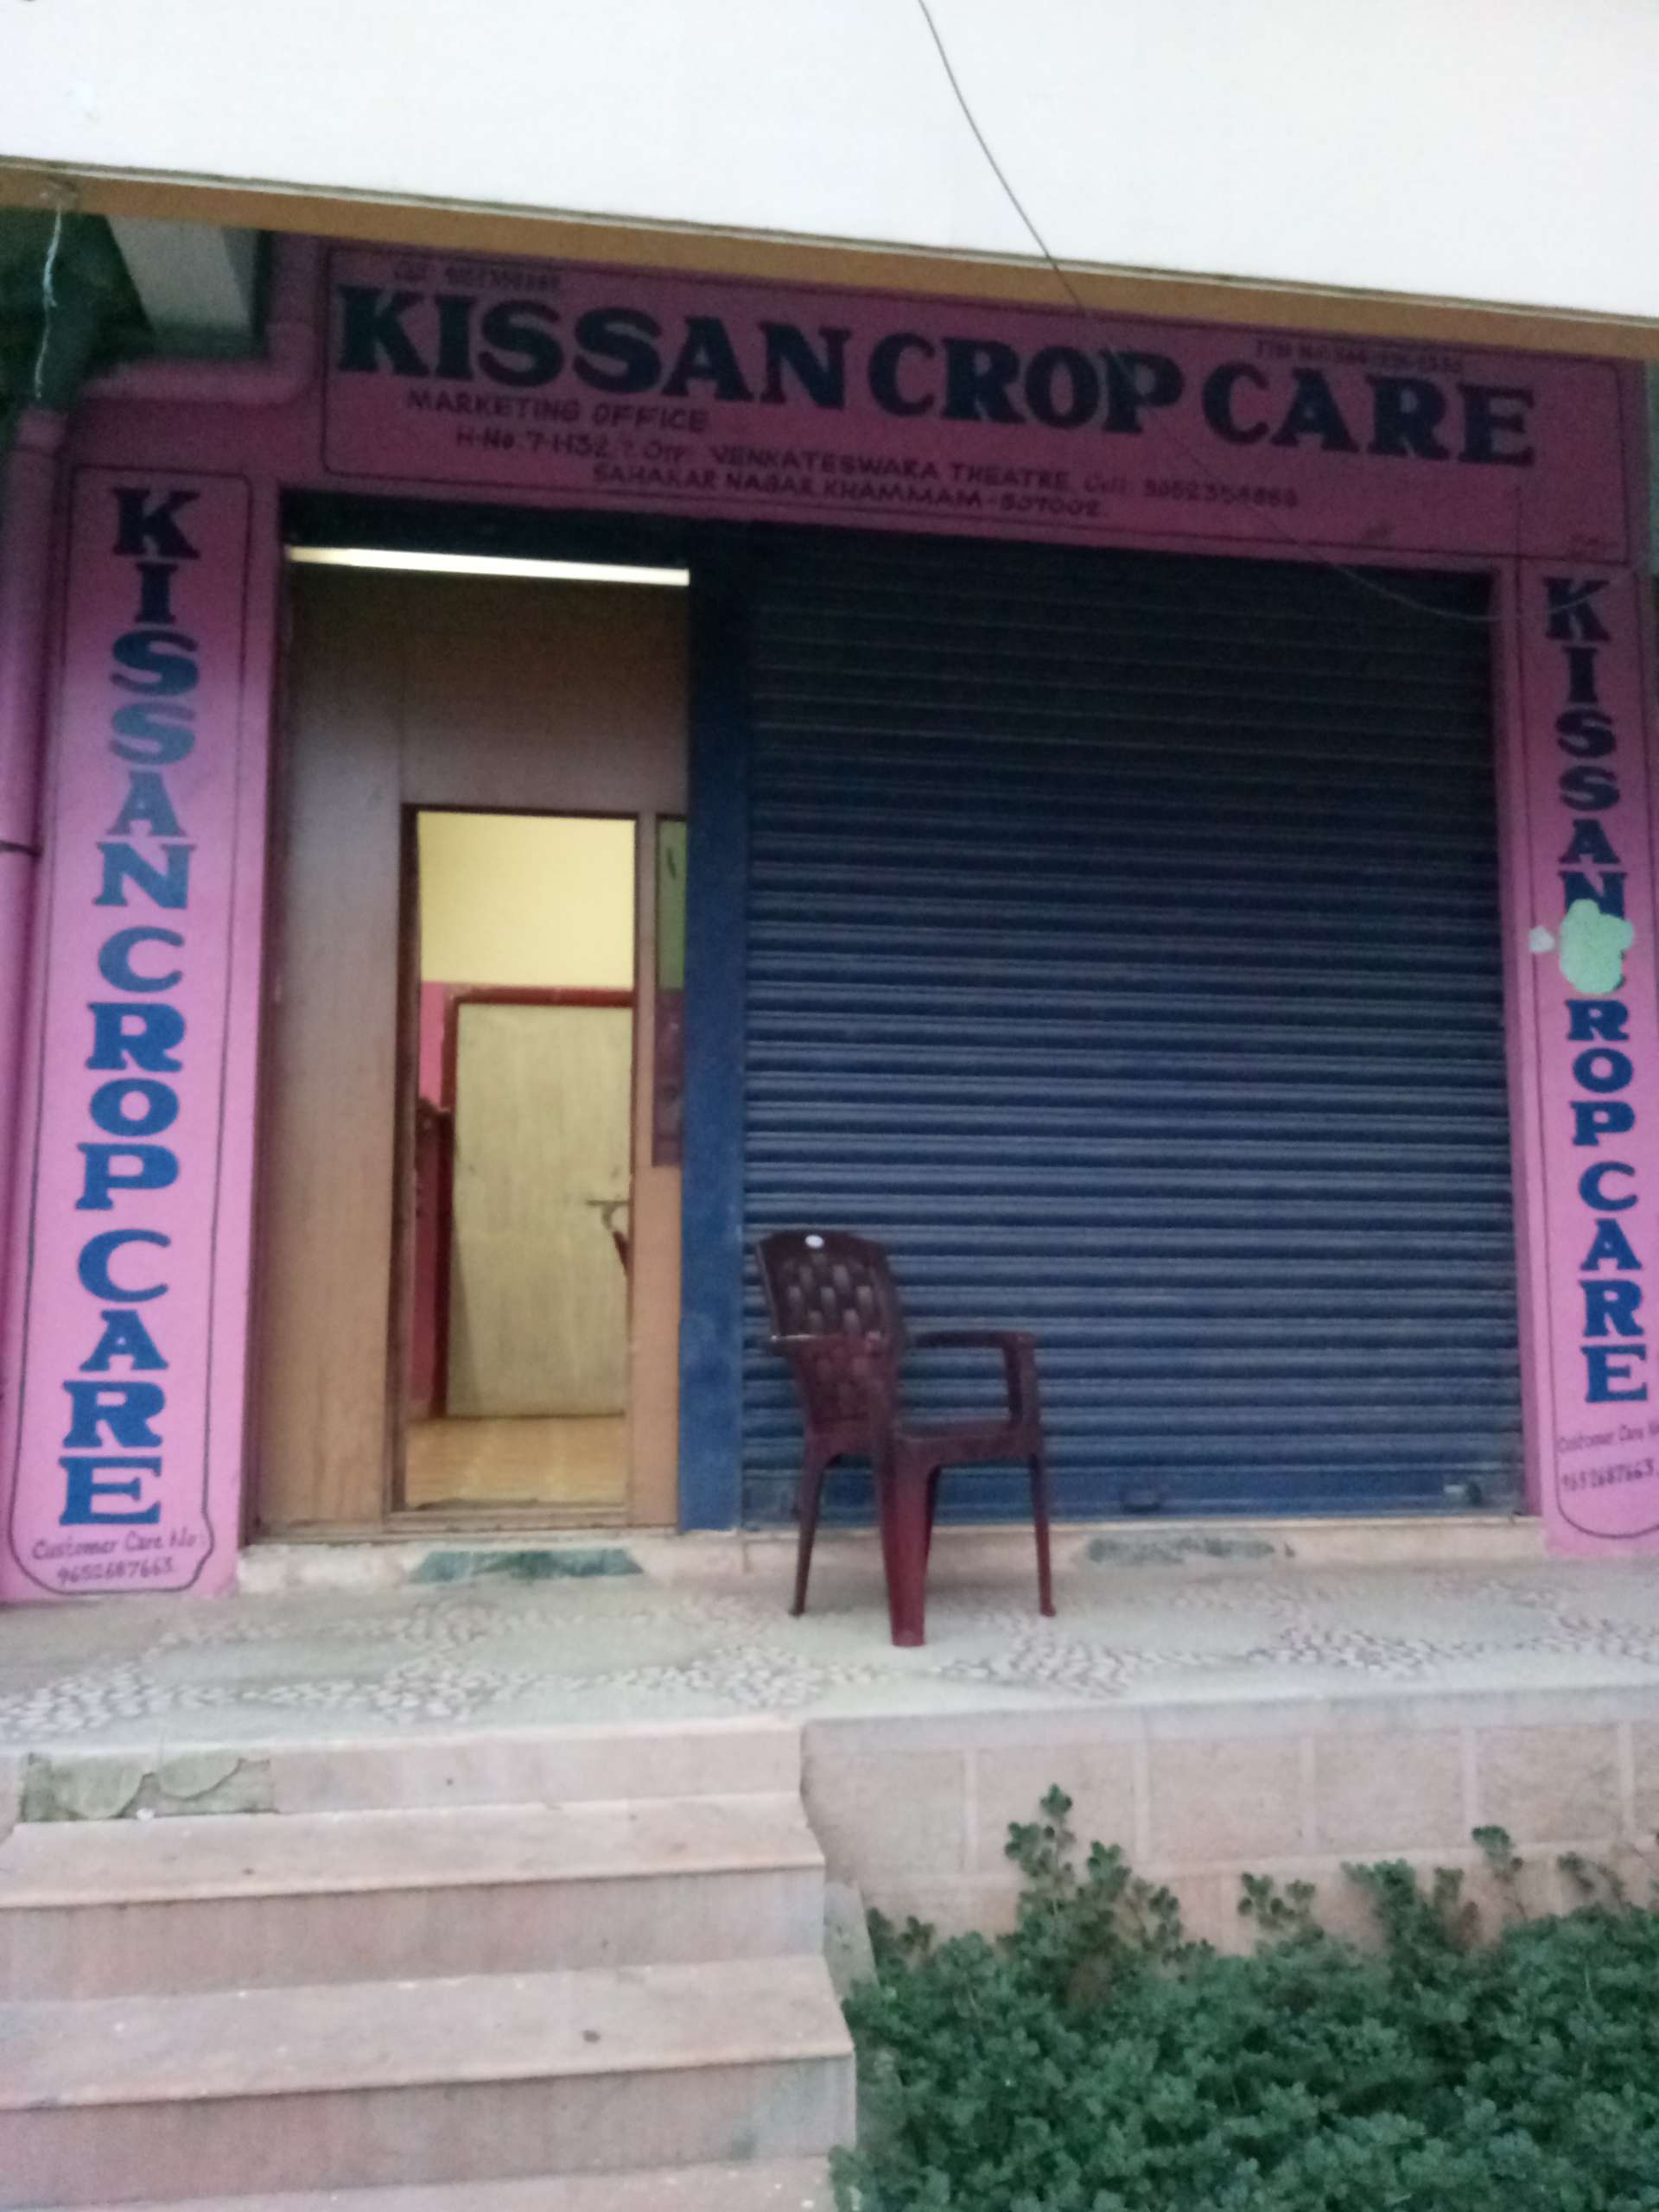 Kissan Crop Care